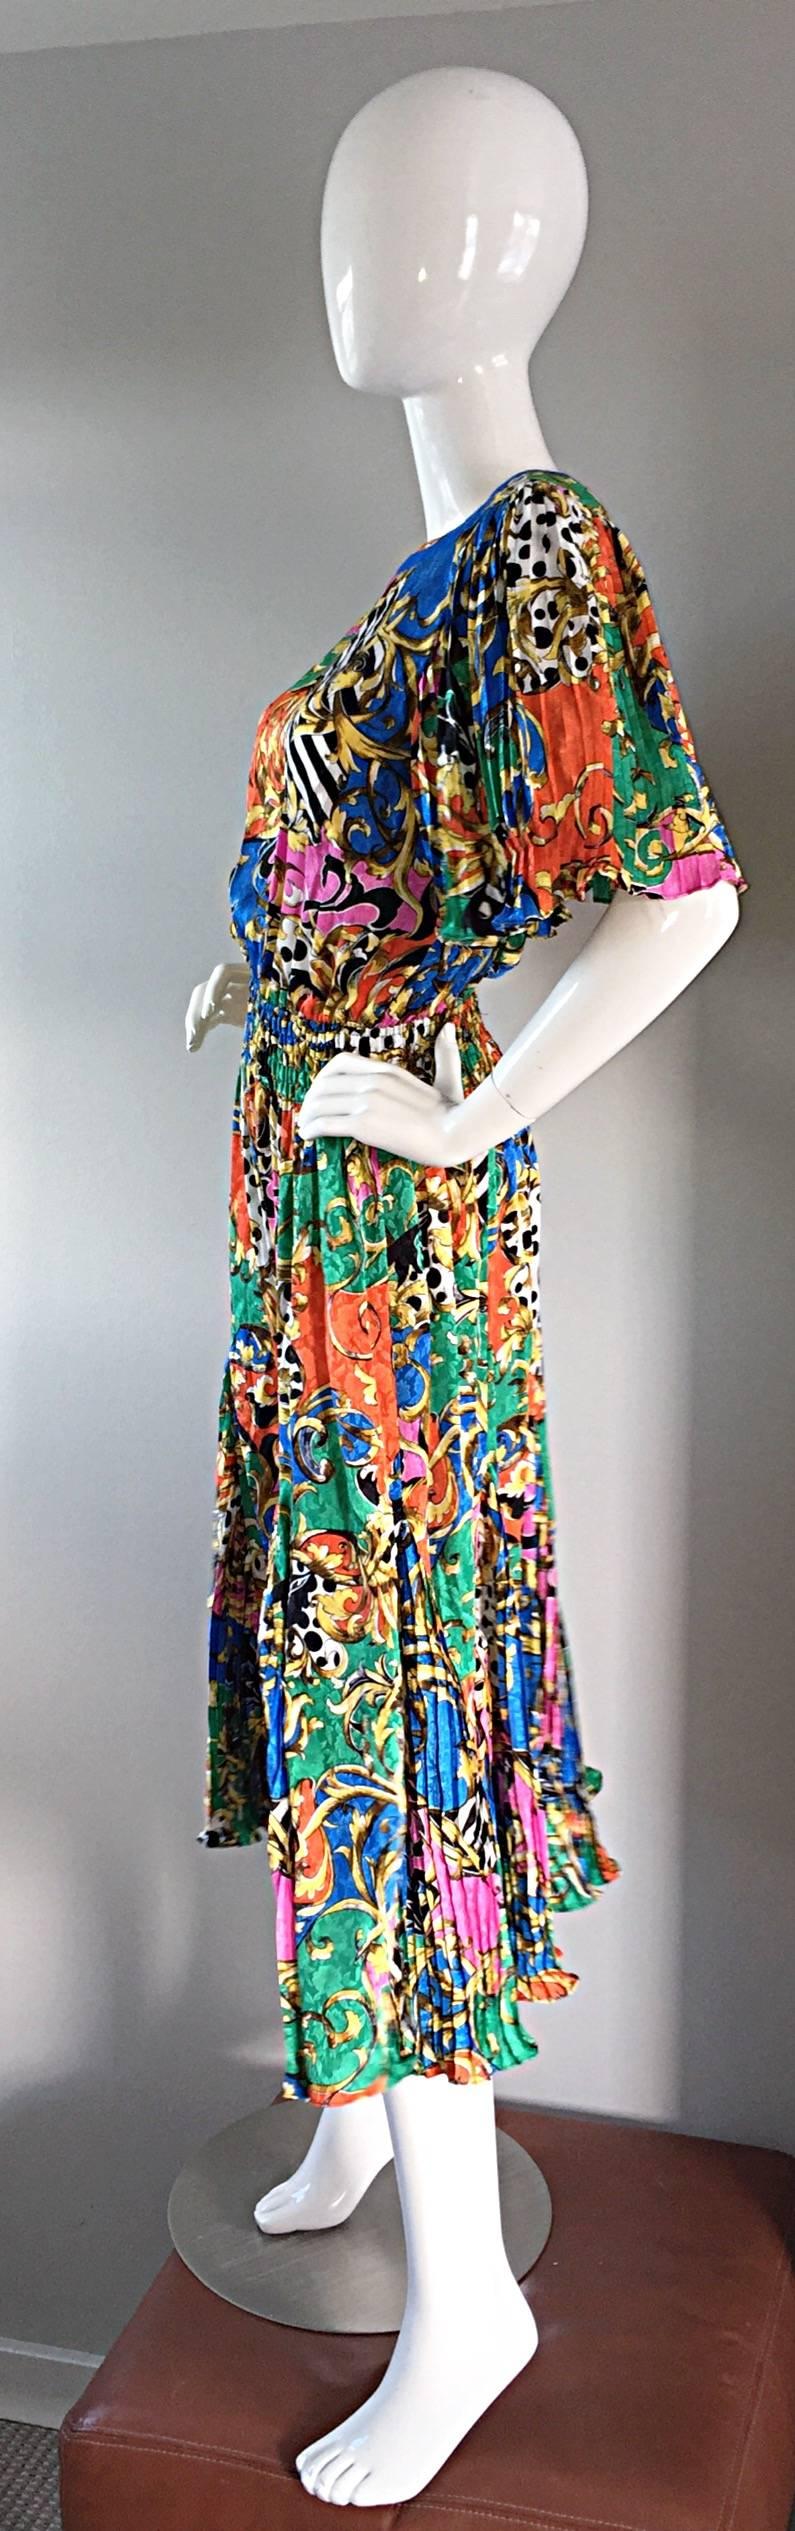 Black Amazing Vintage Diane Freis Psychedelic Colorful Bohemian Boho Dress